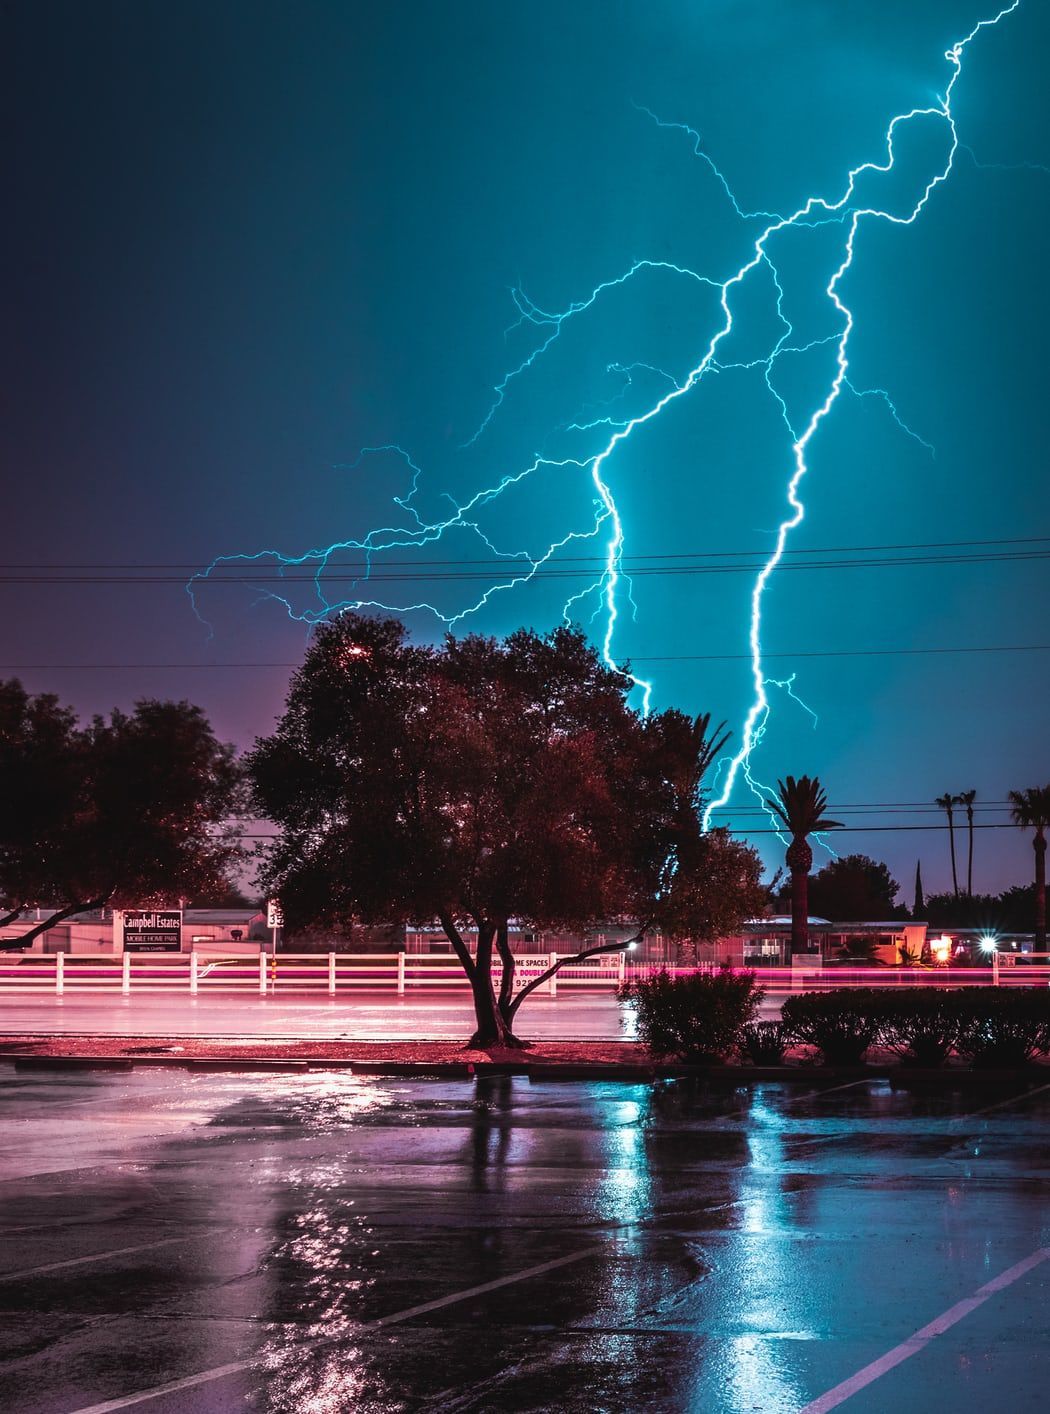 Lightning strikes over a parking lot - Lightning